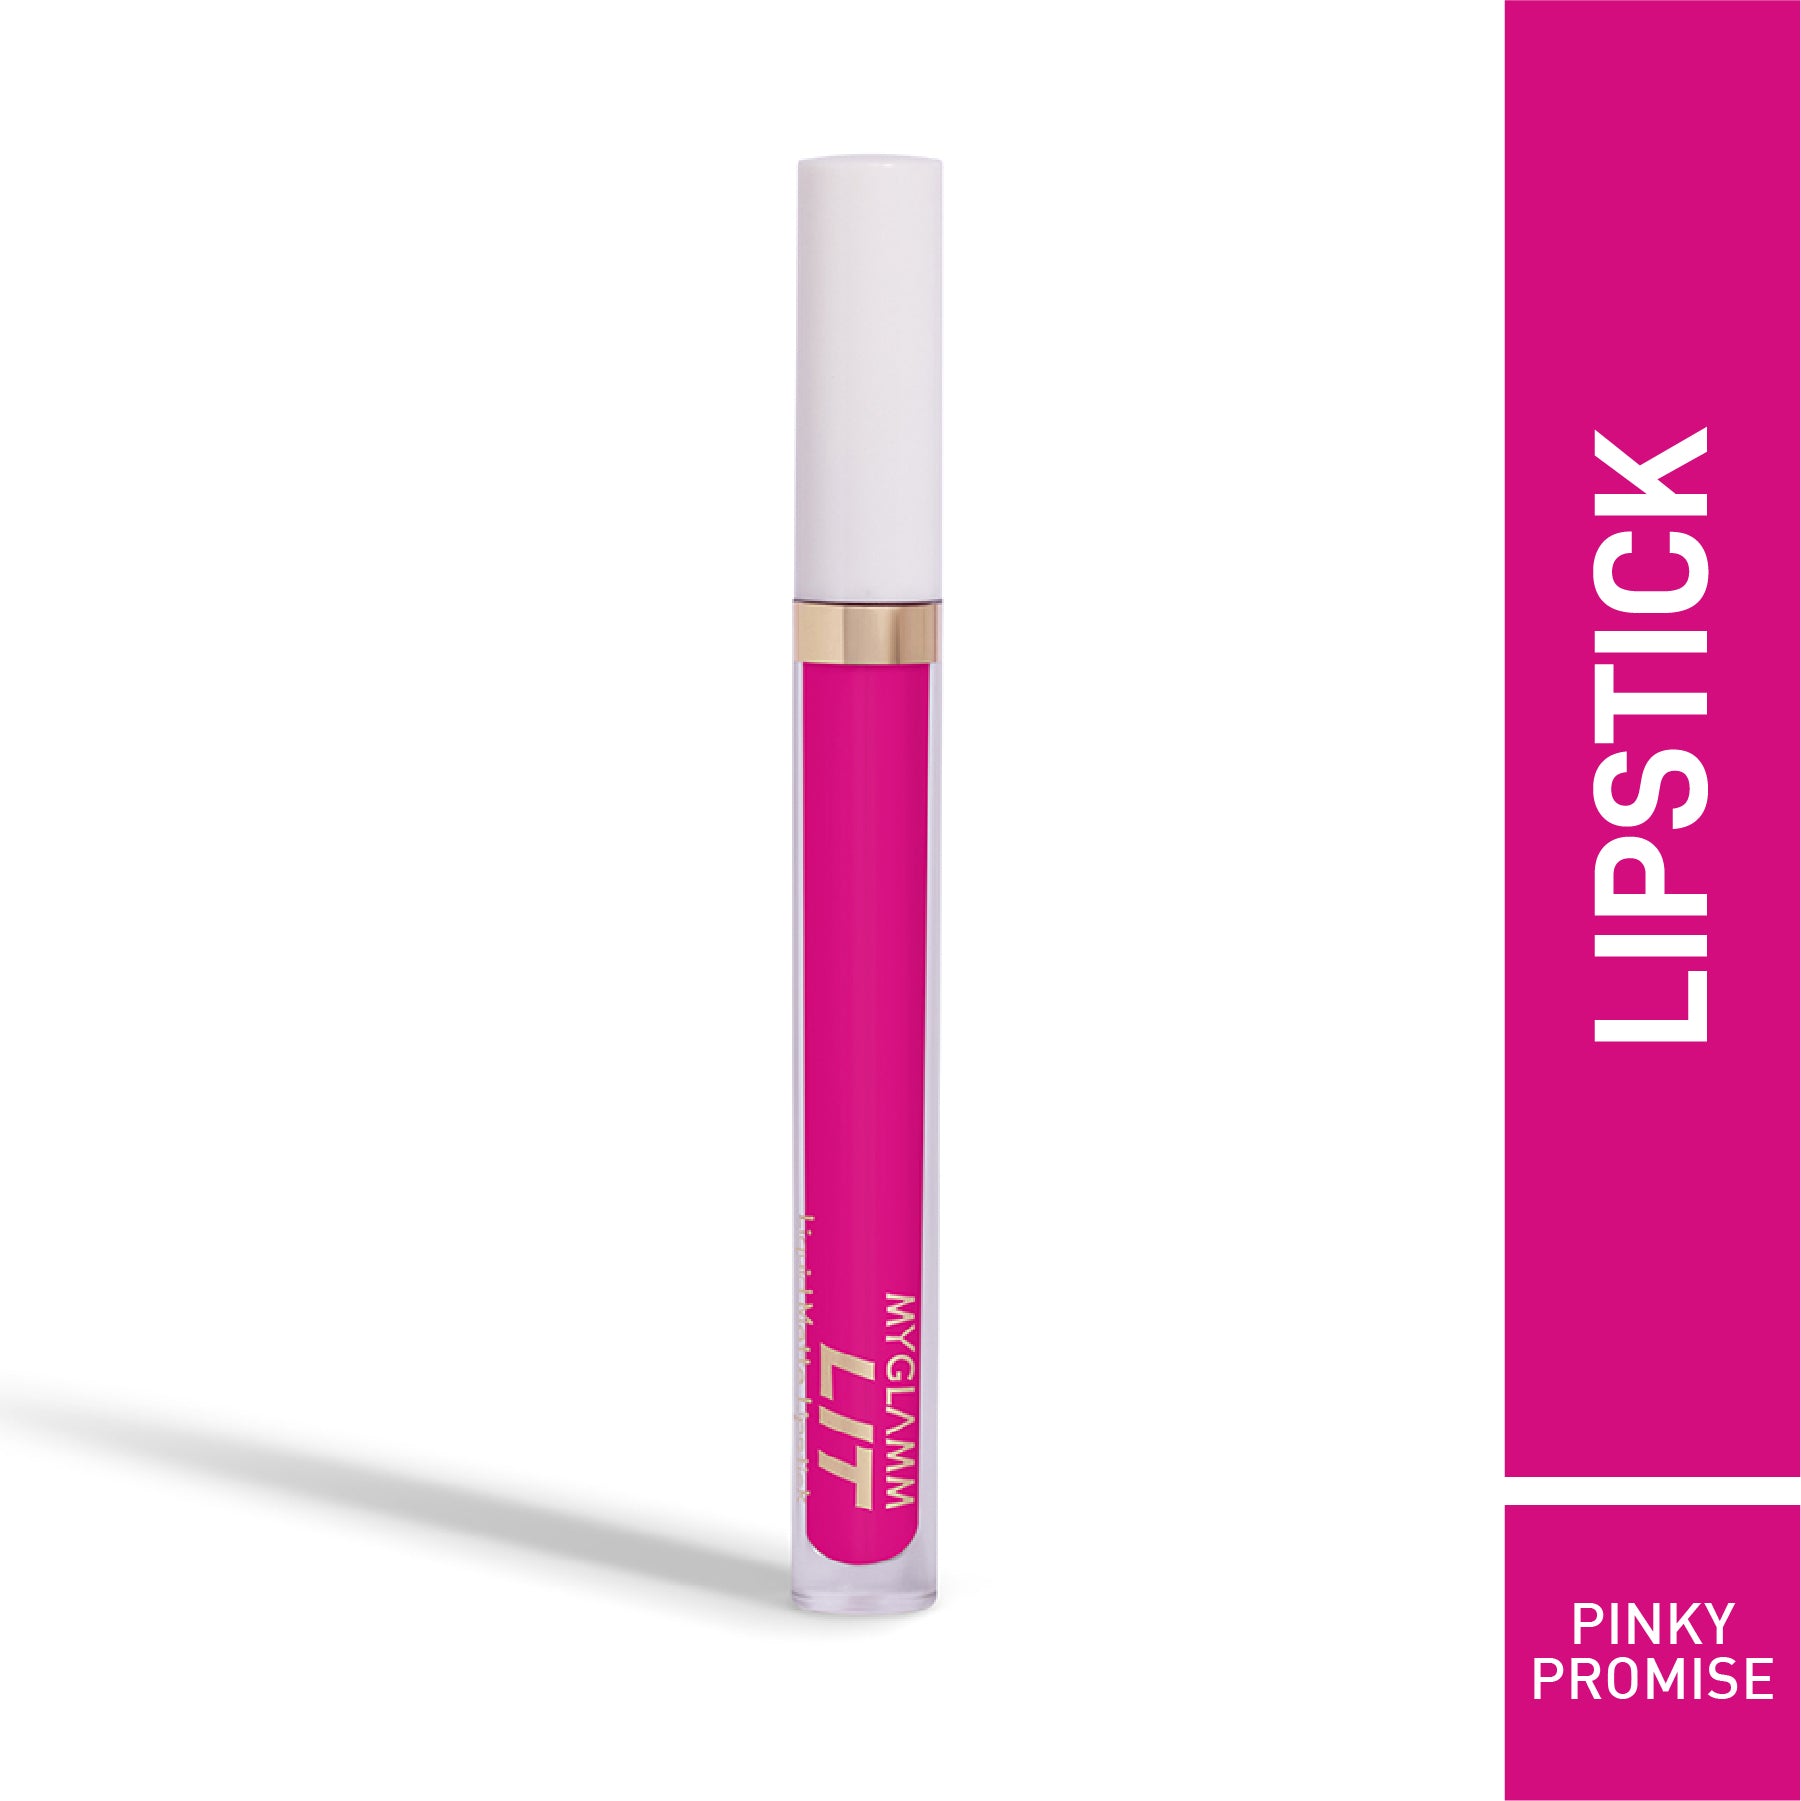 MyGlamm LIT Liquid Matte Lipstick-Pinky promise-3ml